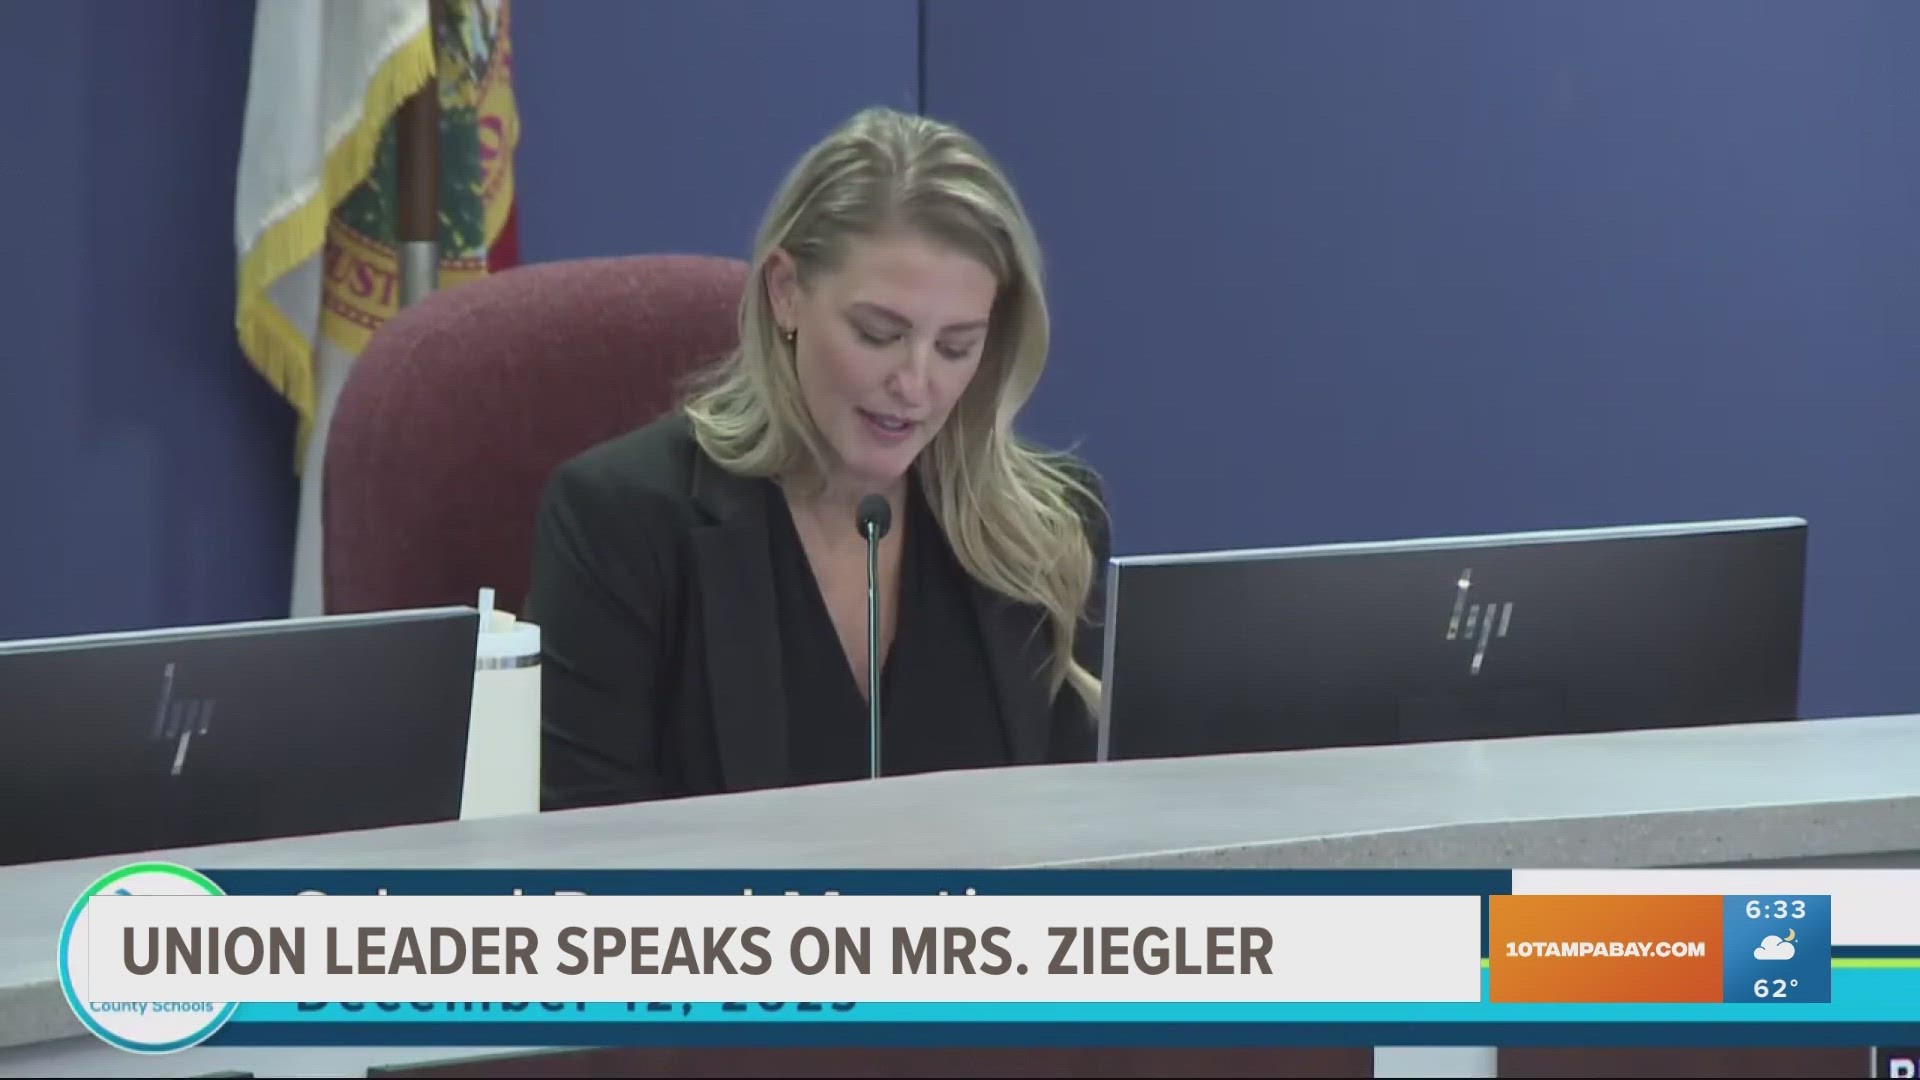 Bridget Ziegler refuses to resign from Sarasota school board